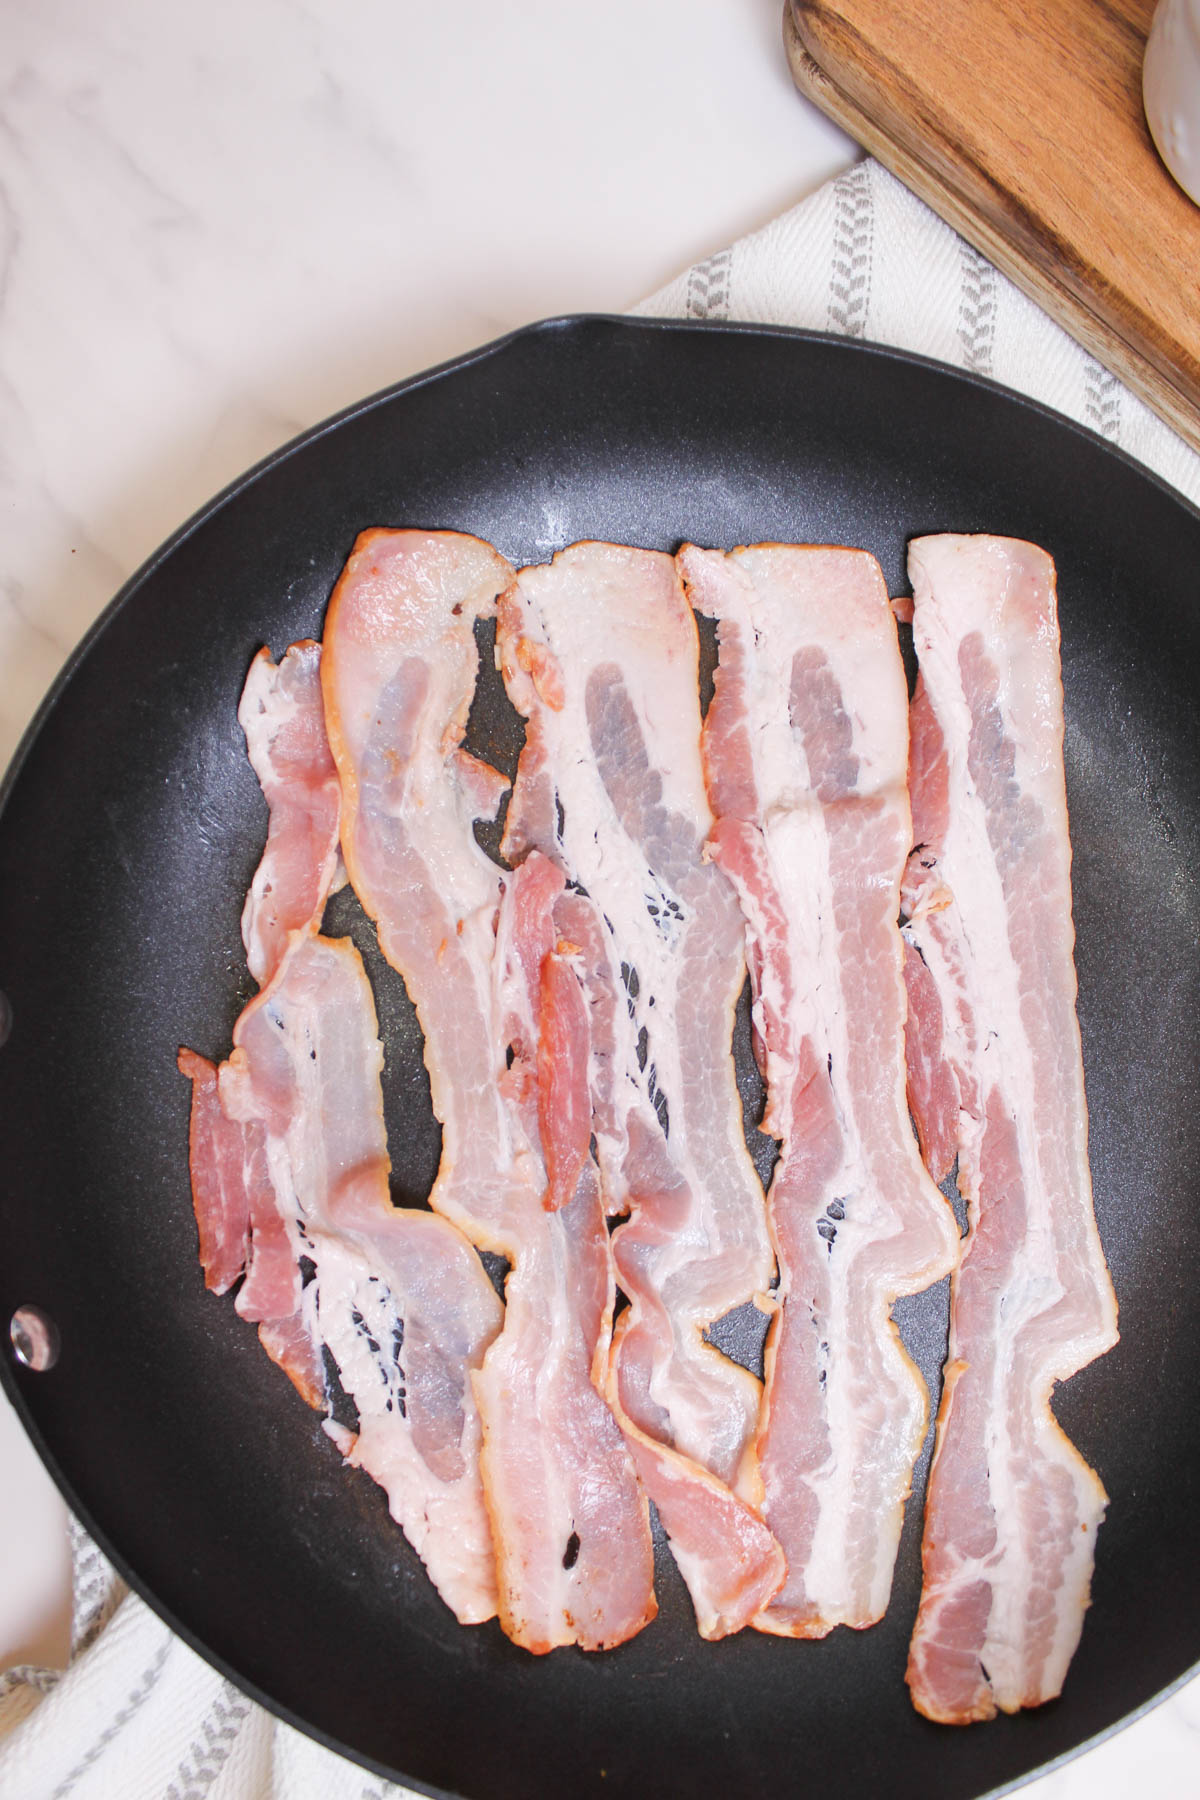 Bacon in a frying pan